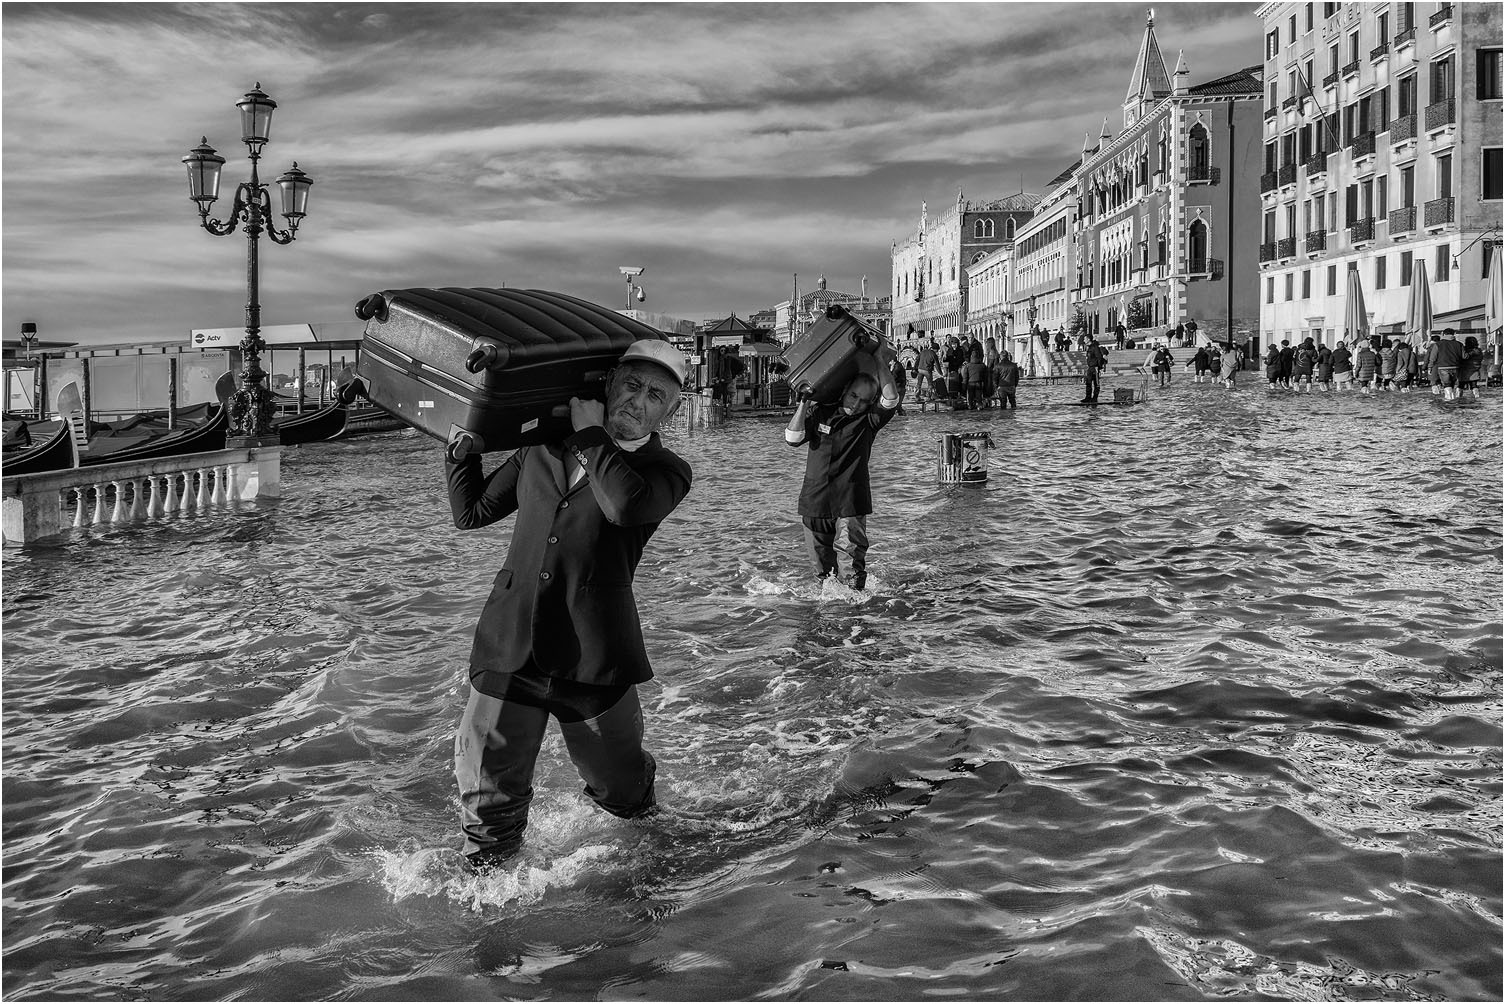 Tomelleri Giuseppe - Venice underwater 3 (2021)